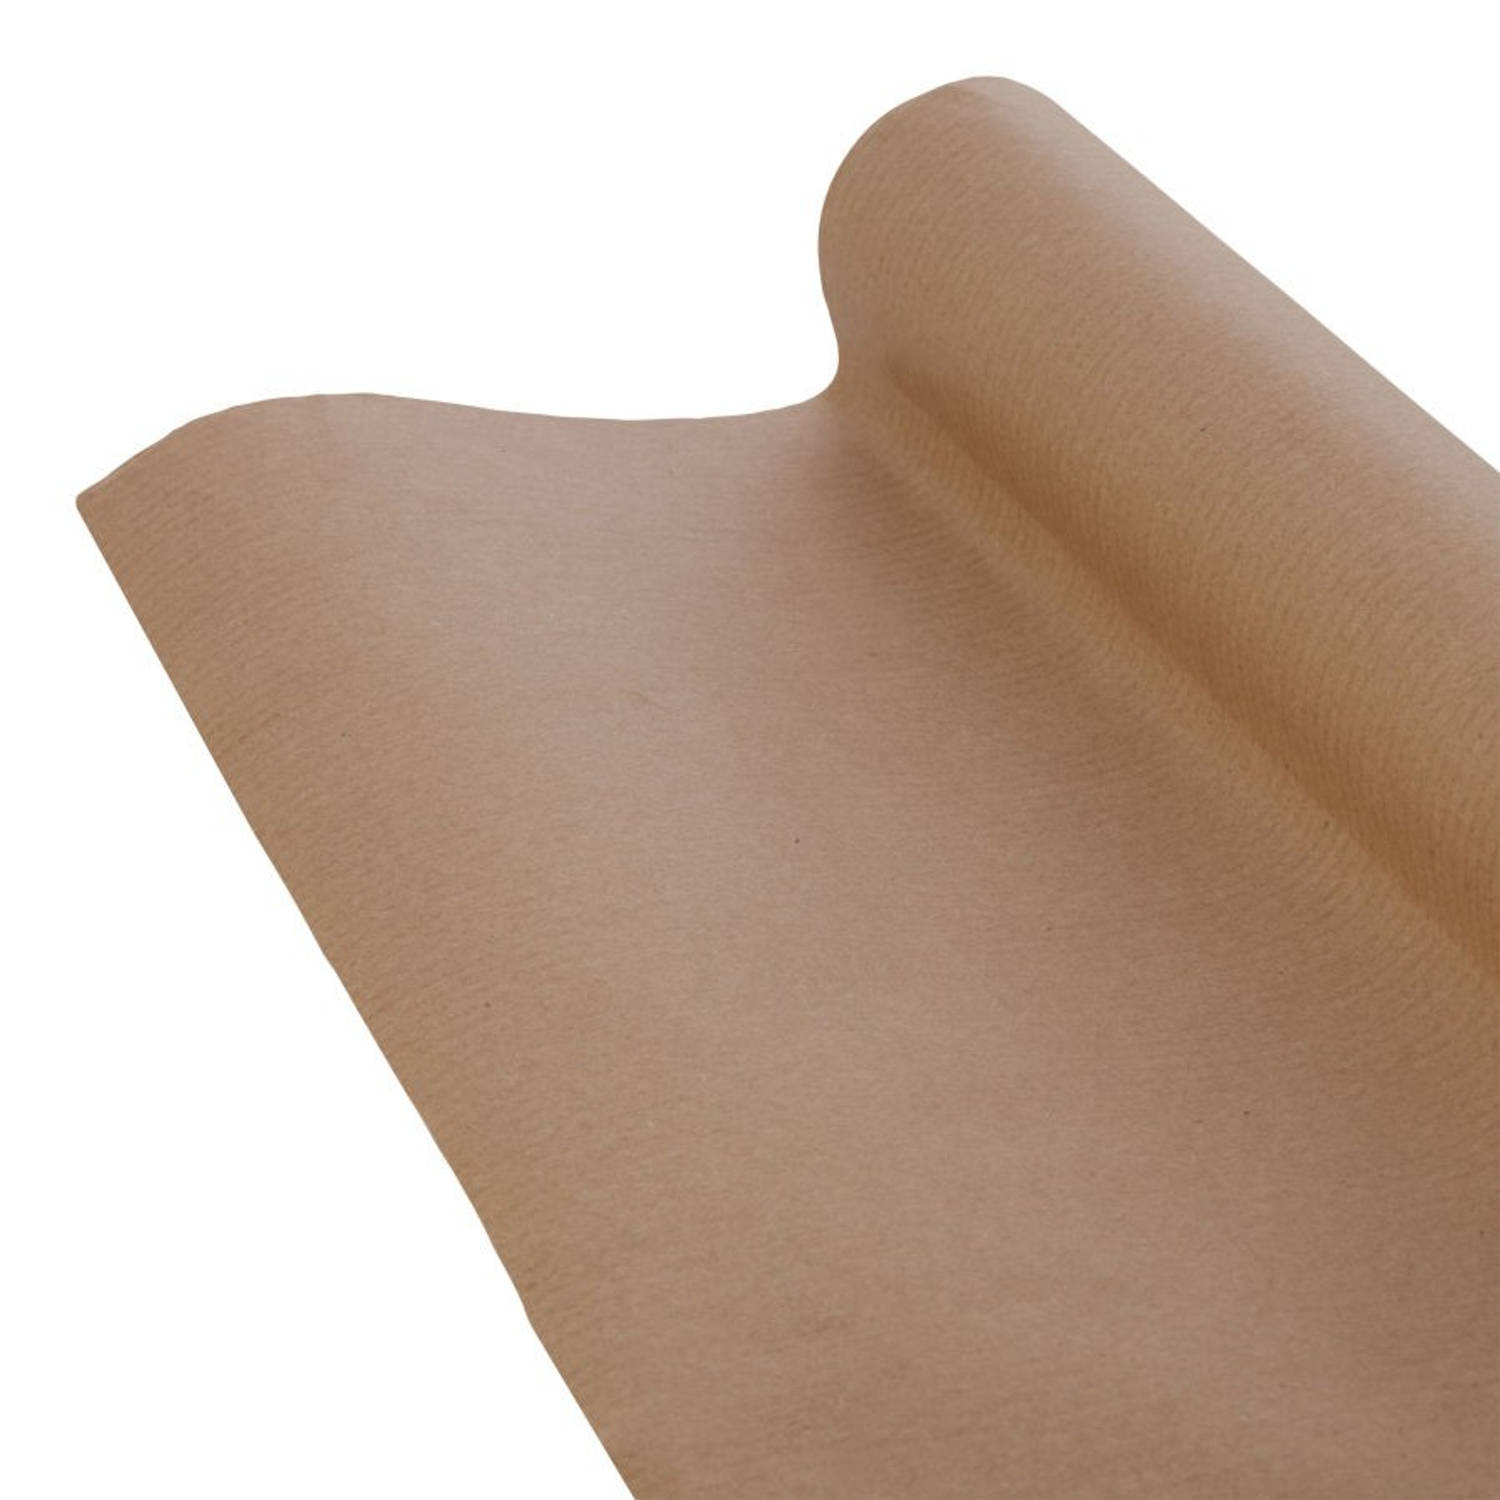 Benza cadeaupapier pakpapier inpakpapier - Bruin - 70 cm x 5 meter per rol - 2 rollen